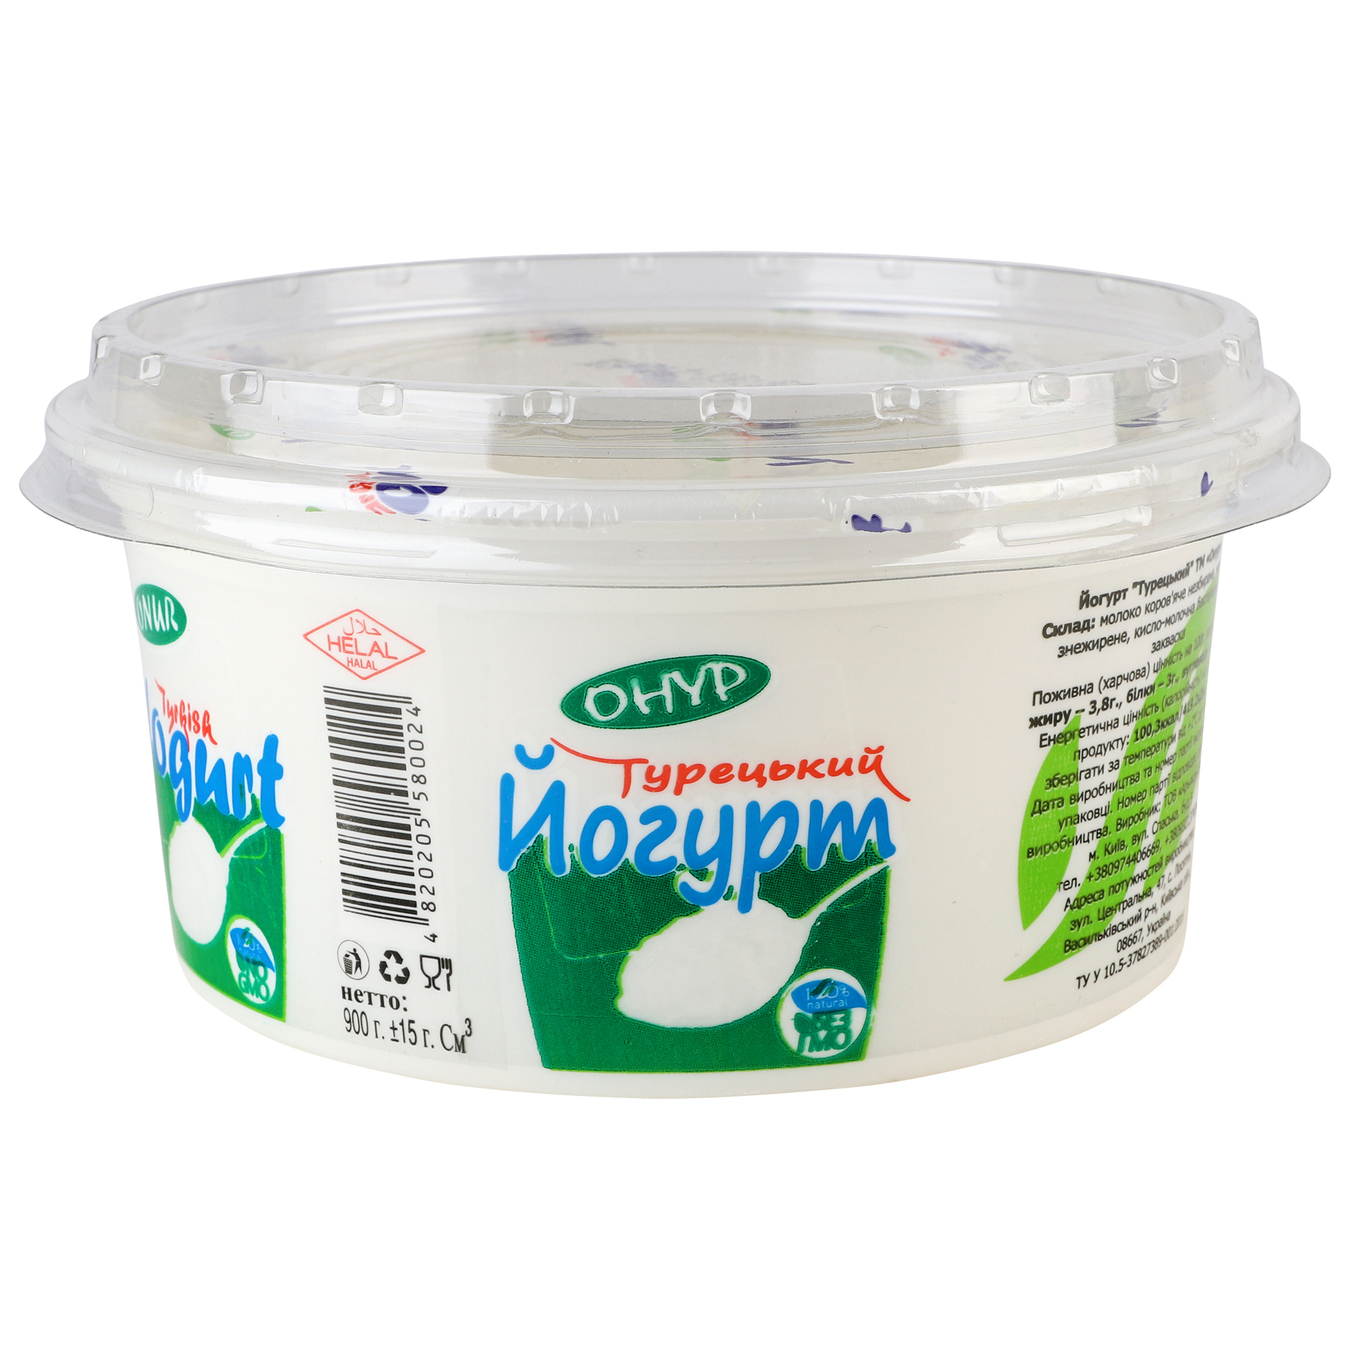 Onur Turkish Yogurt 3,8% 900g 2